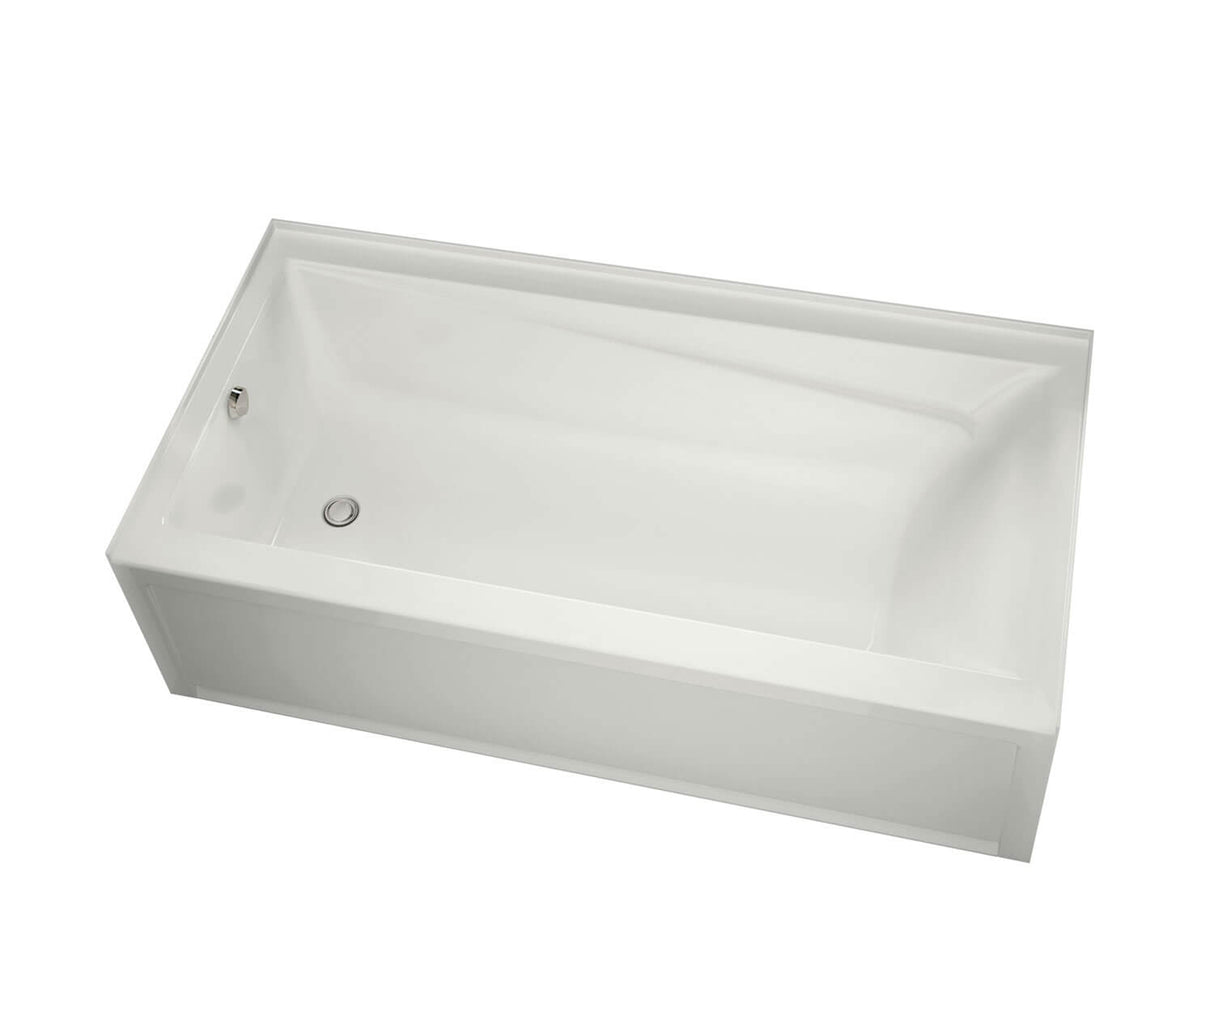 MAAX 105512-103-001-100 Exhibit 6032 IFS AFR Acrylic Alcove Left-Hand Drain Aeroeffect Bathtub in White